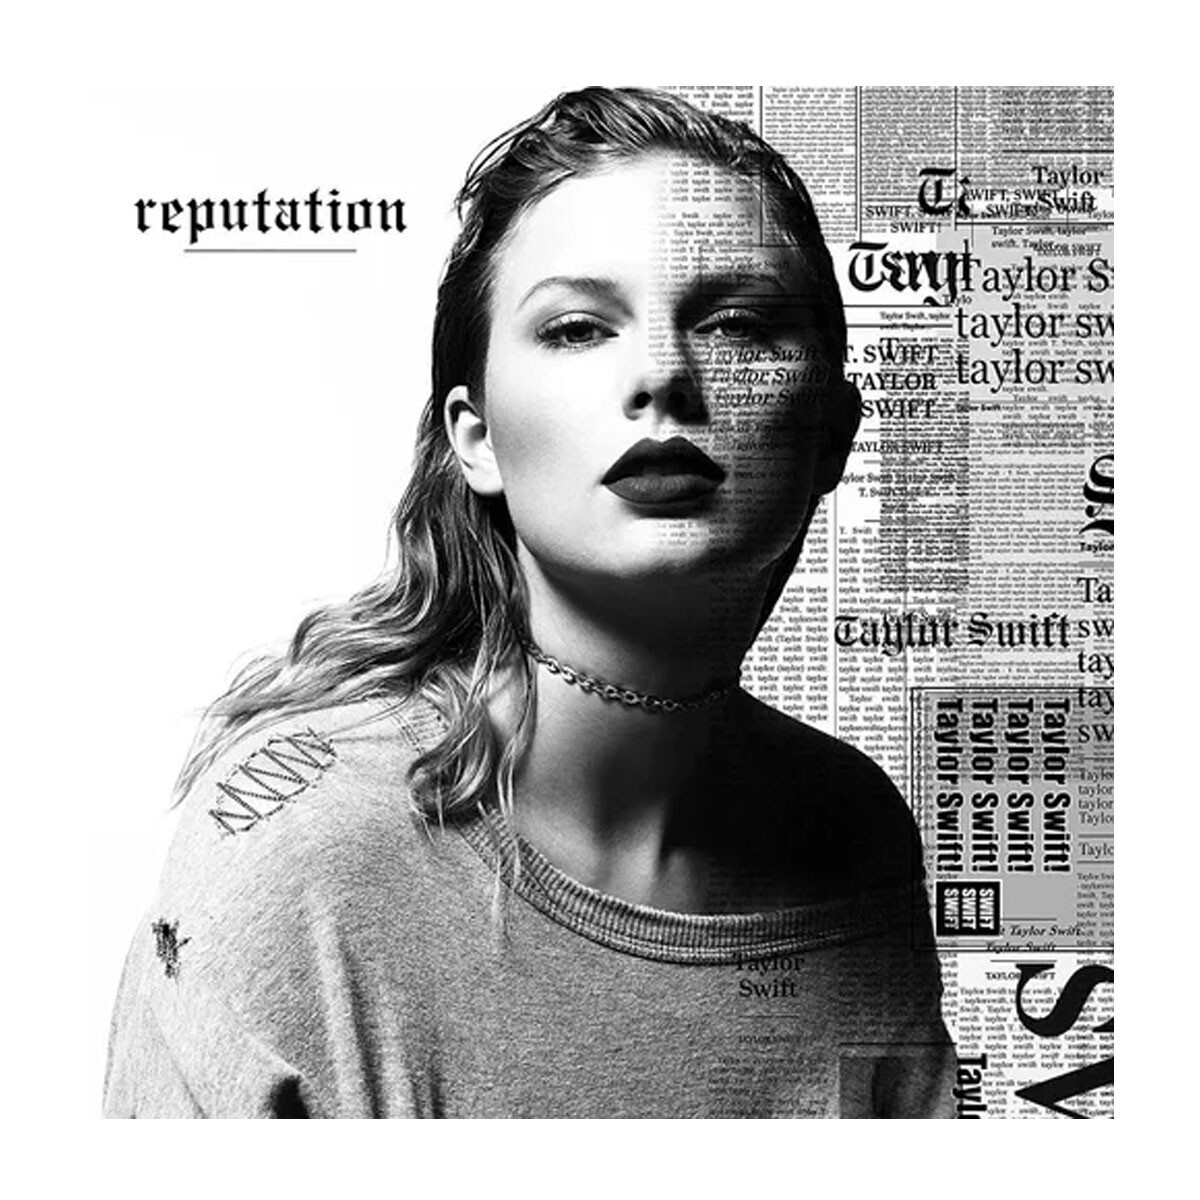 Swift Taylor -reputation 